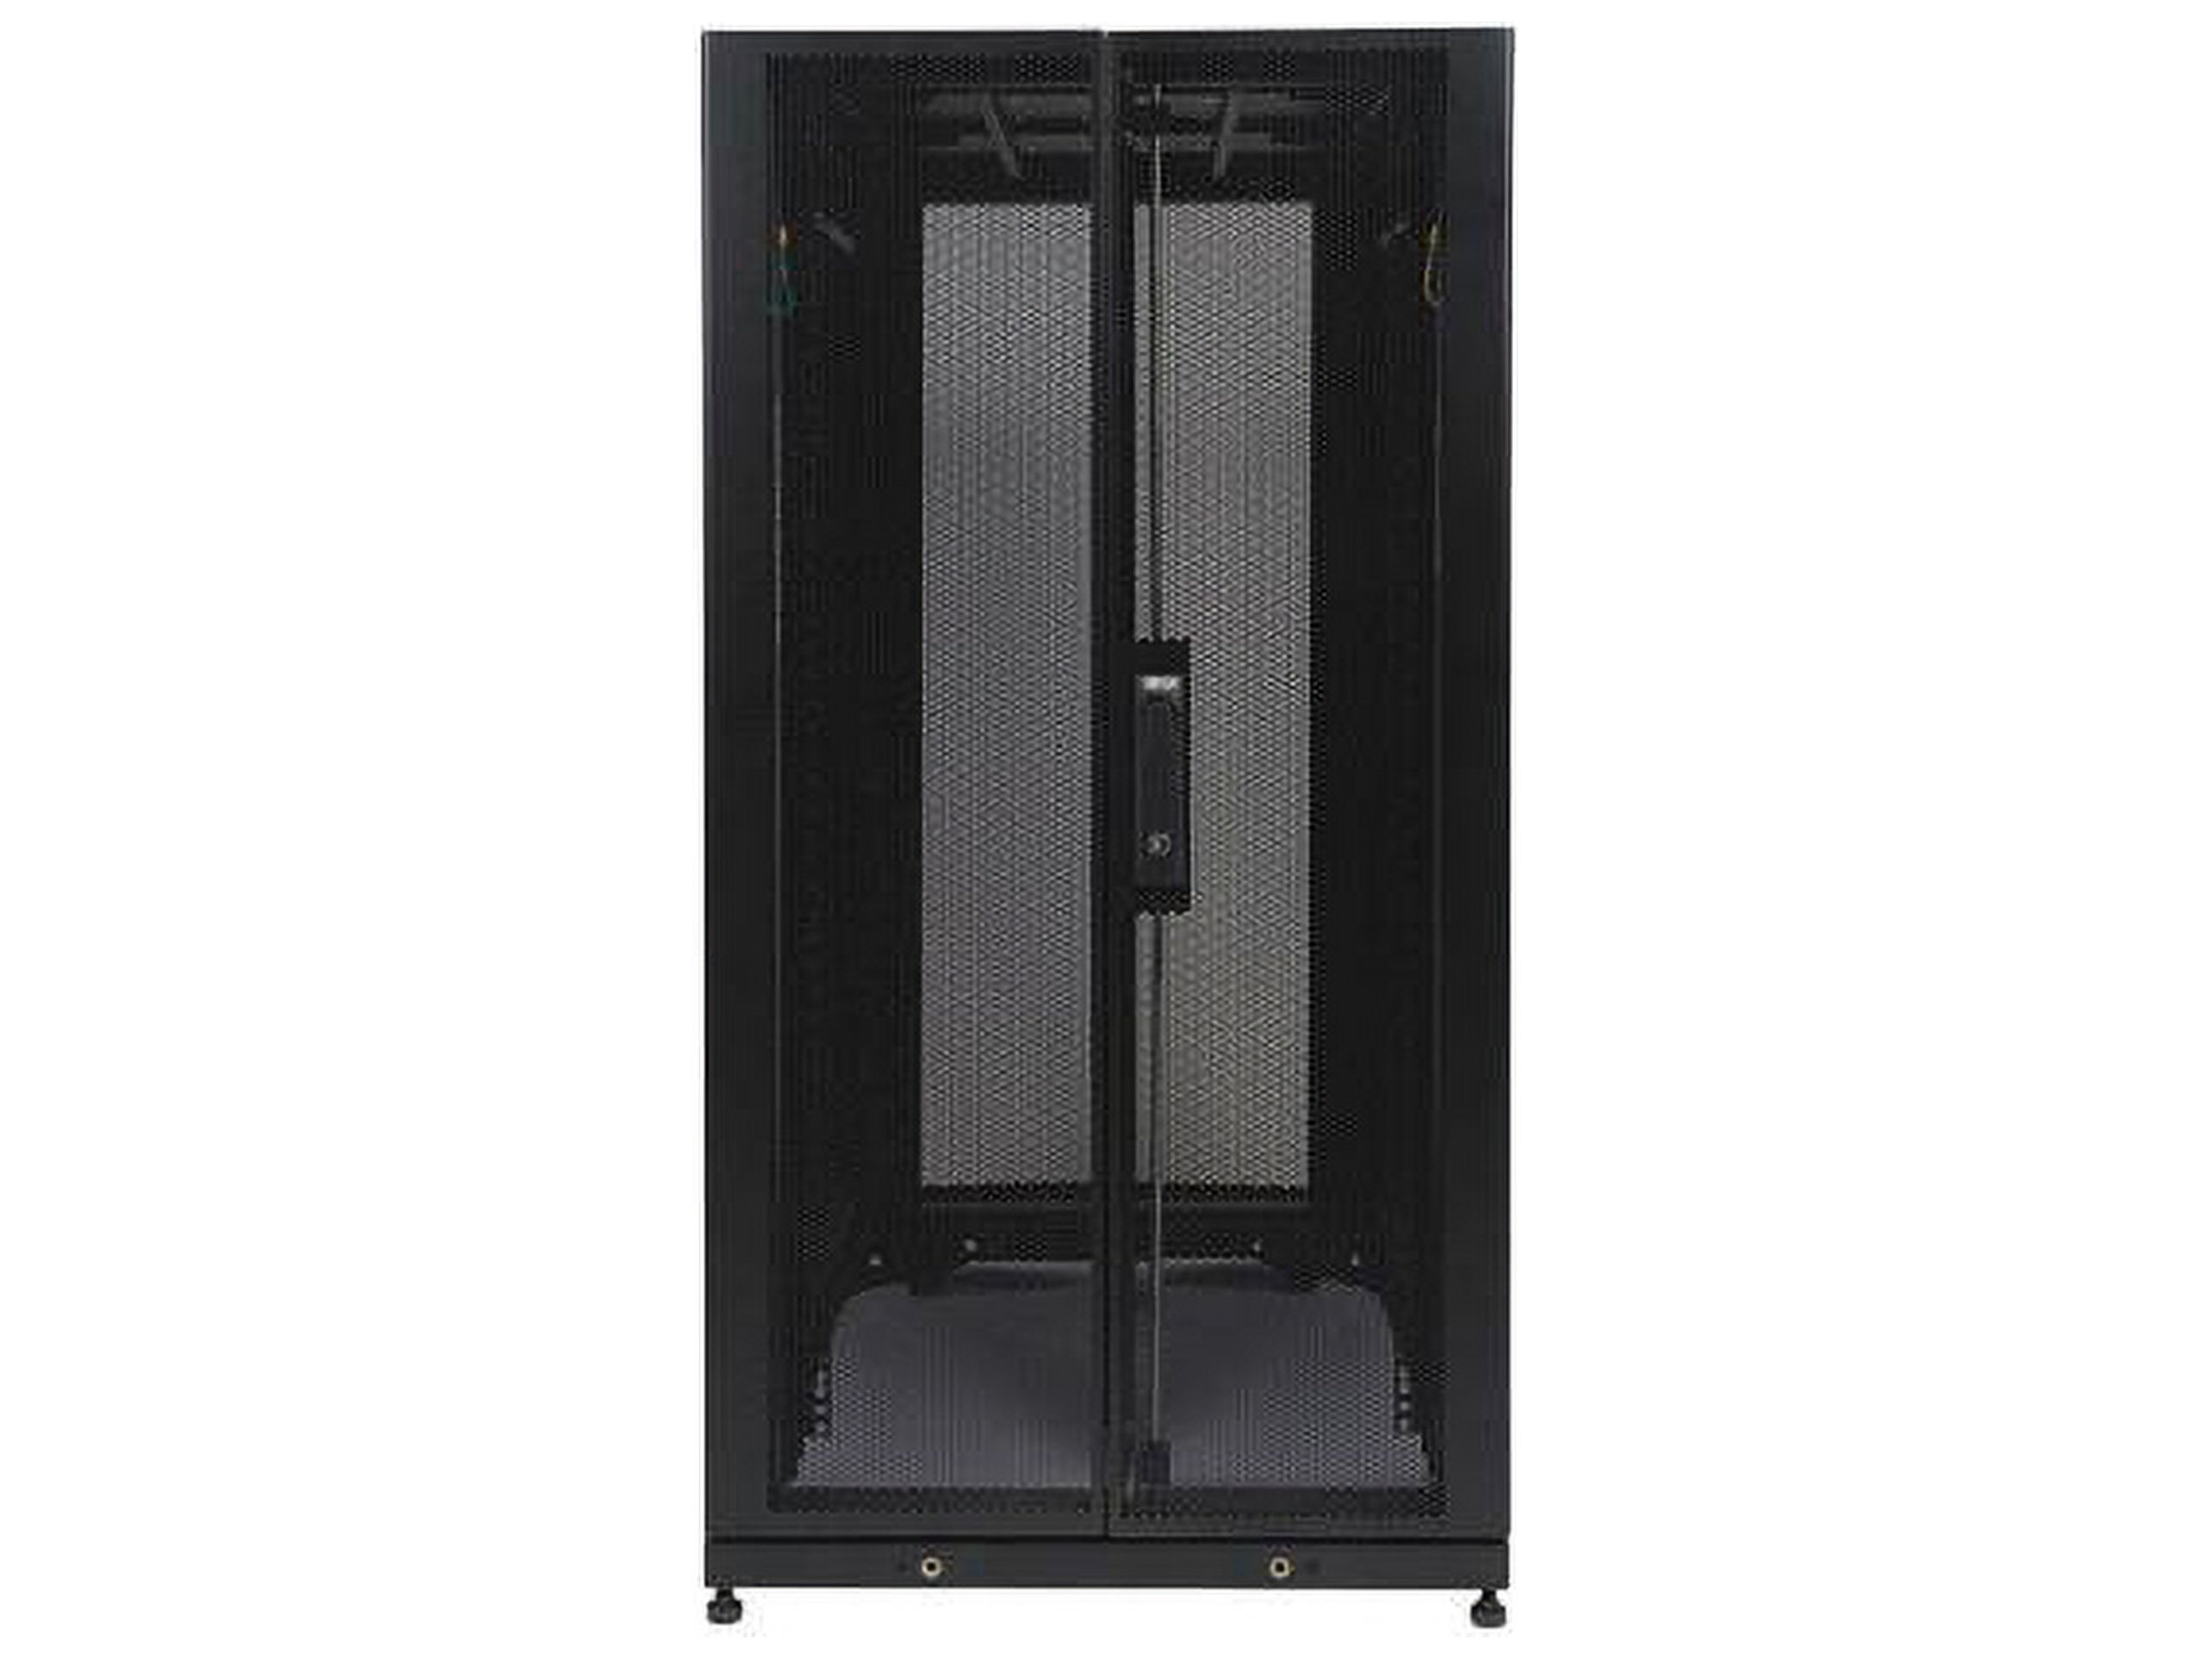 Tripp Lite SR25UB 25U Rack Enclosure Server Cabinet - image 3 of 4